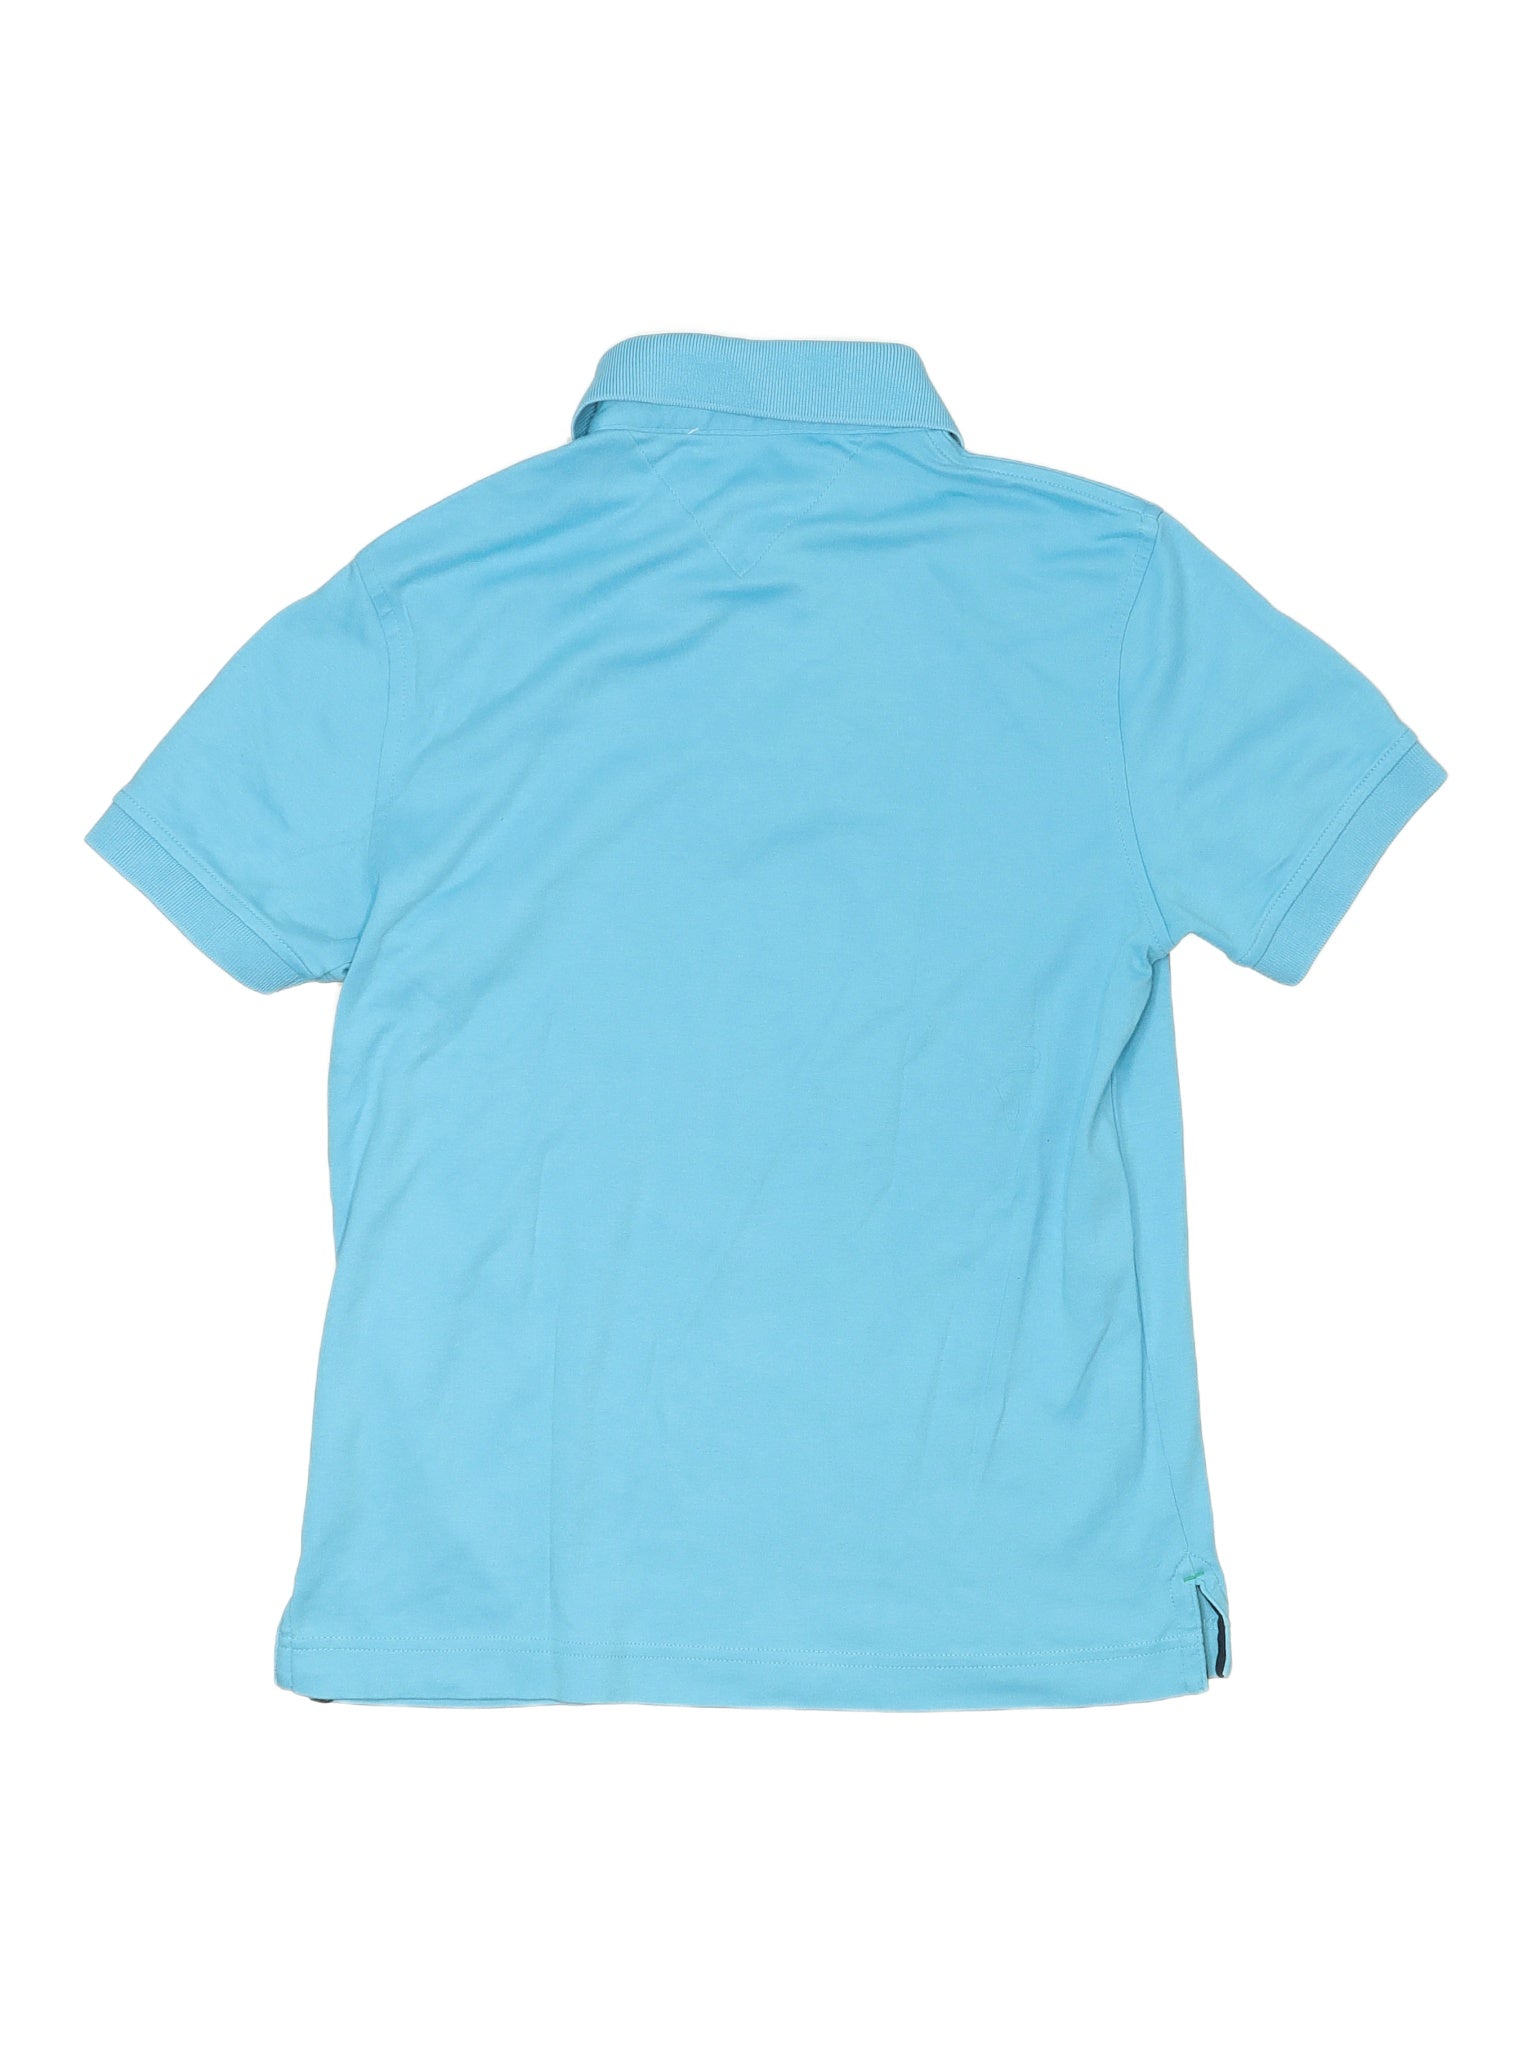 Polo Shirt size - S